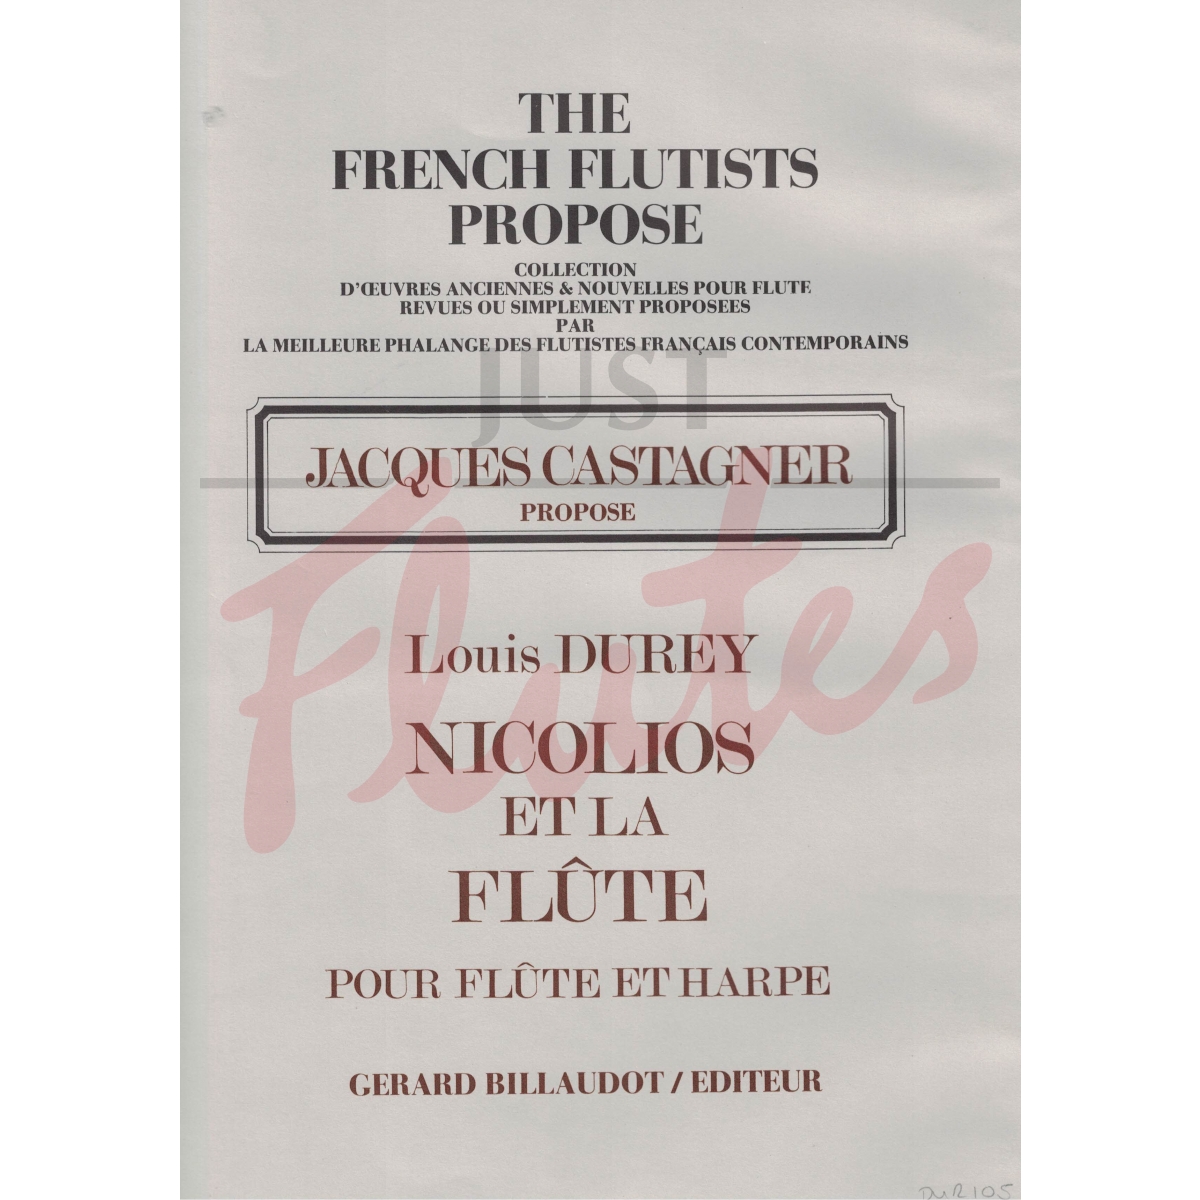 Nicolios et la Flute for Flute and Harp